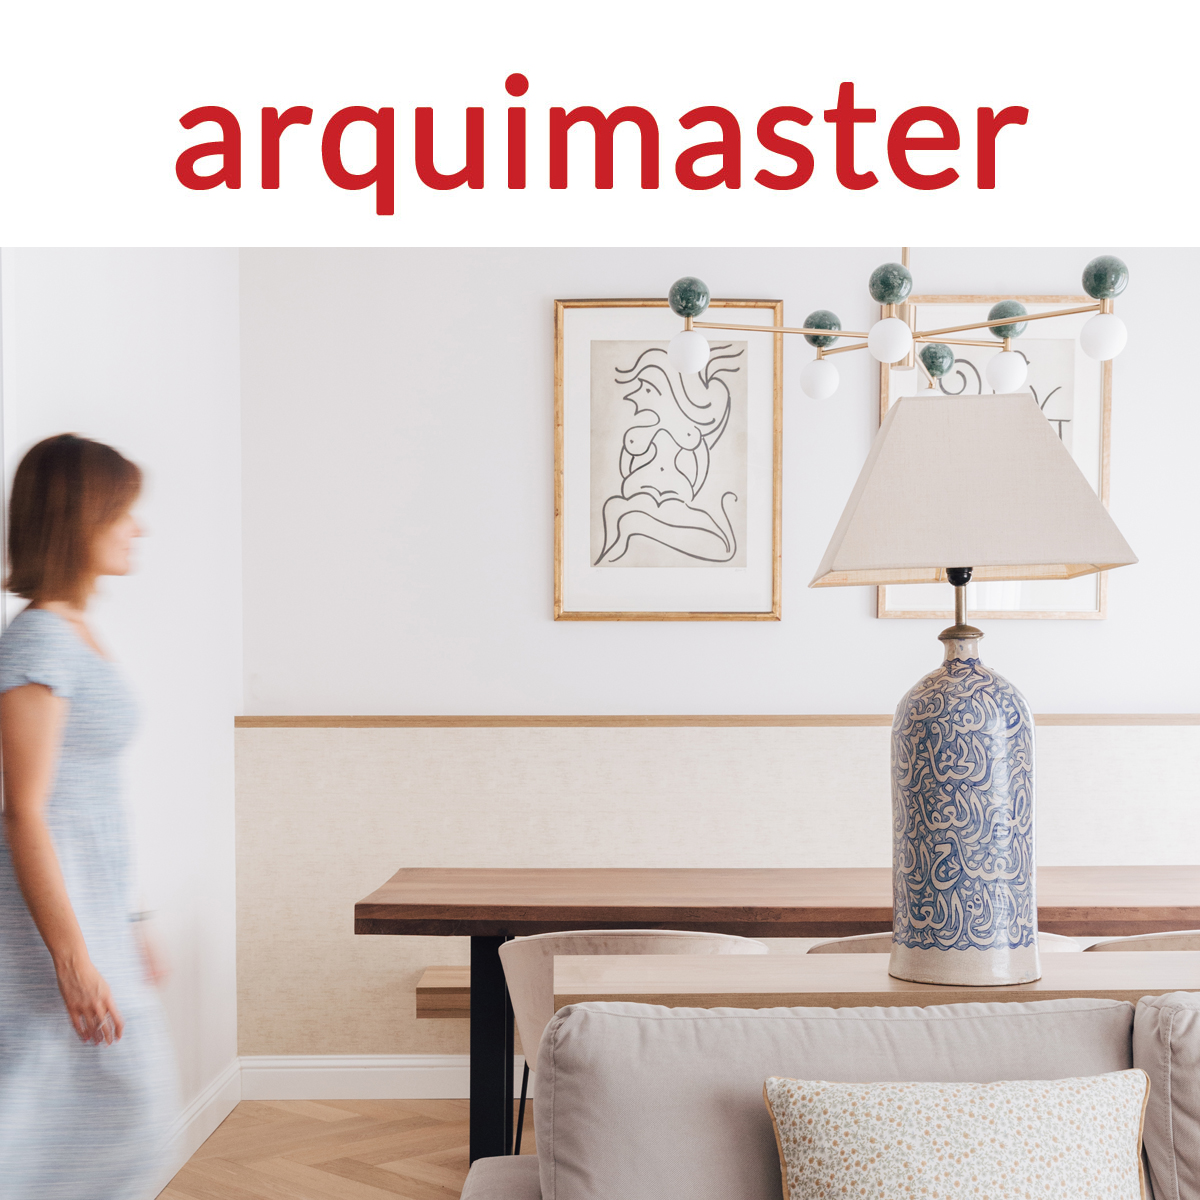 Arquimaster